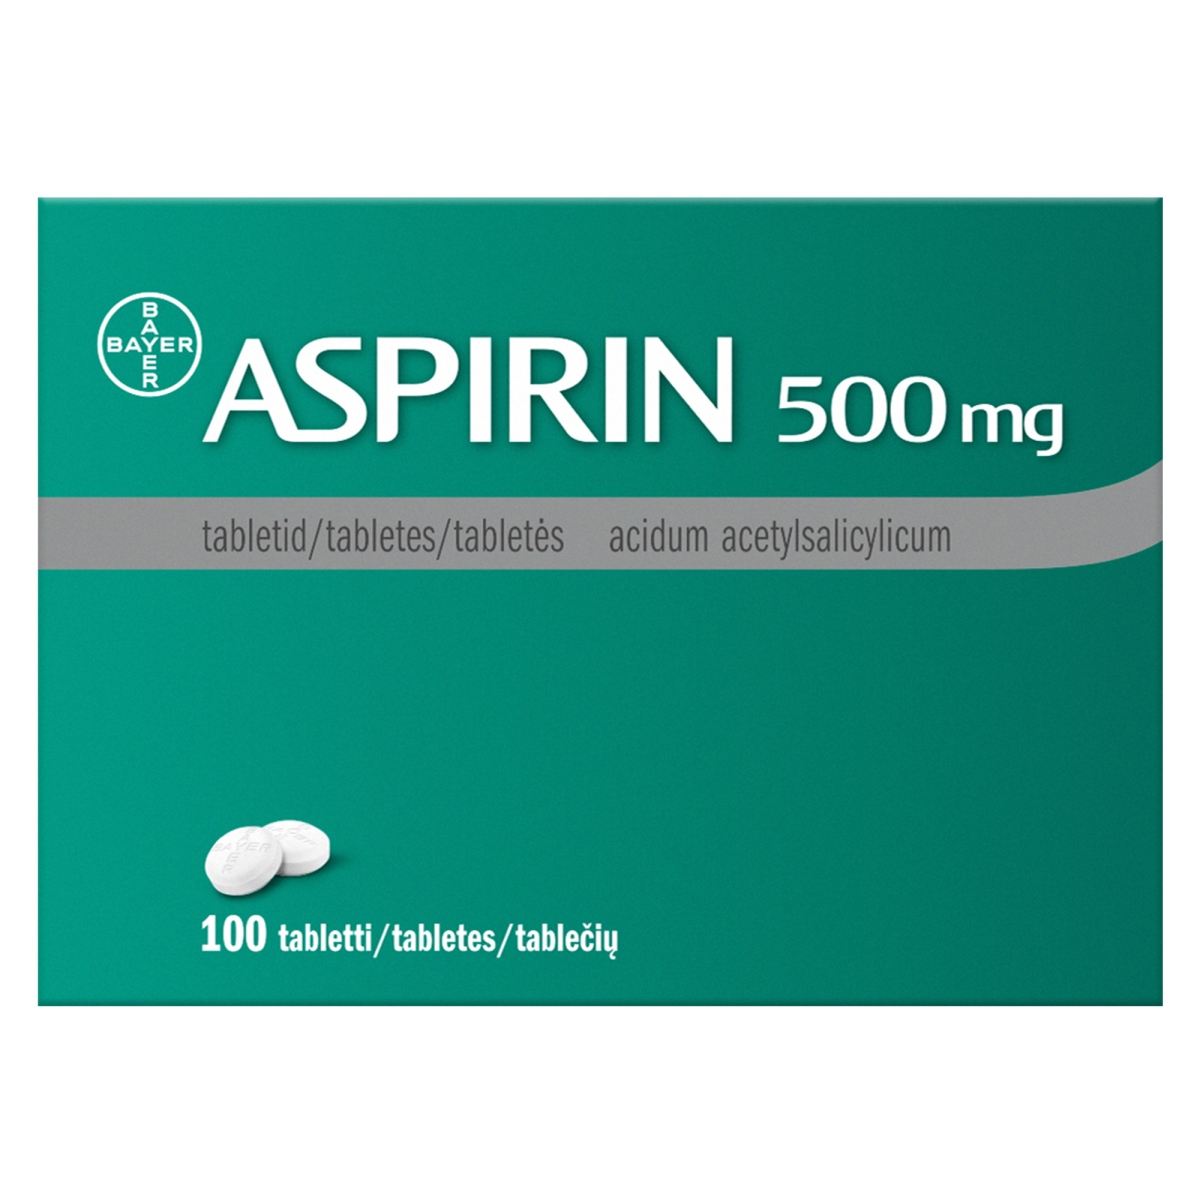 ASPIRIN 500MG TABLETES N100 (BAYER)